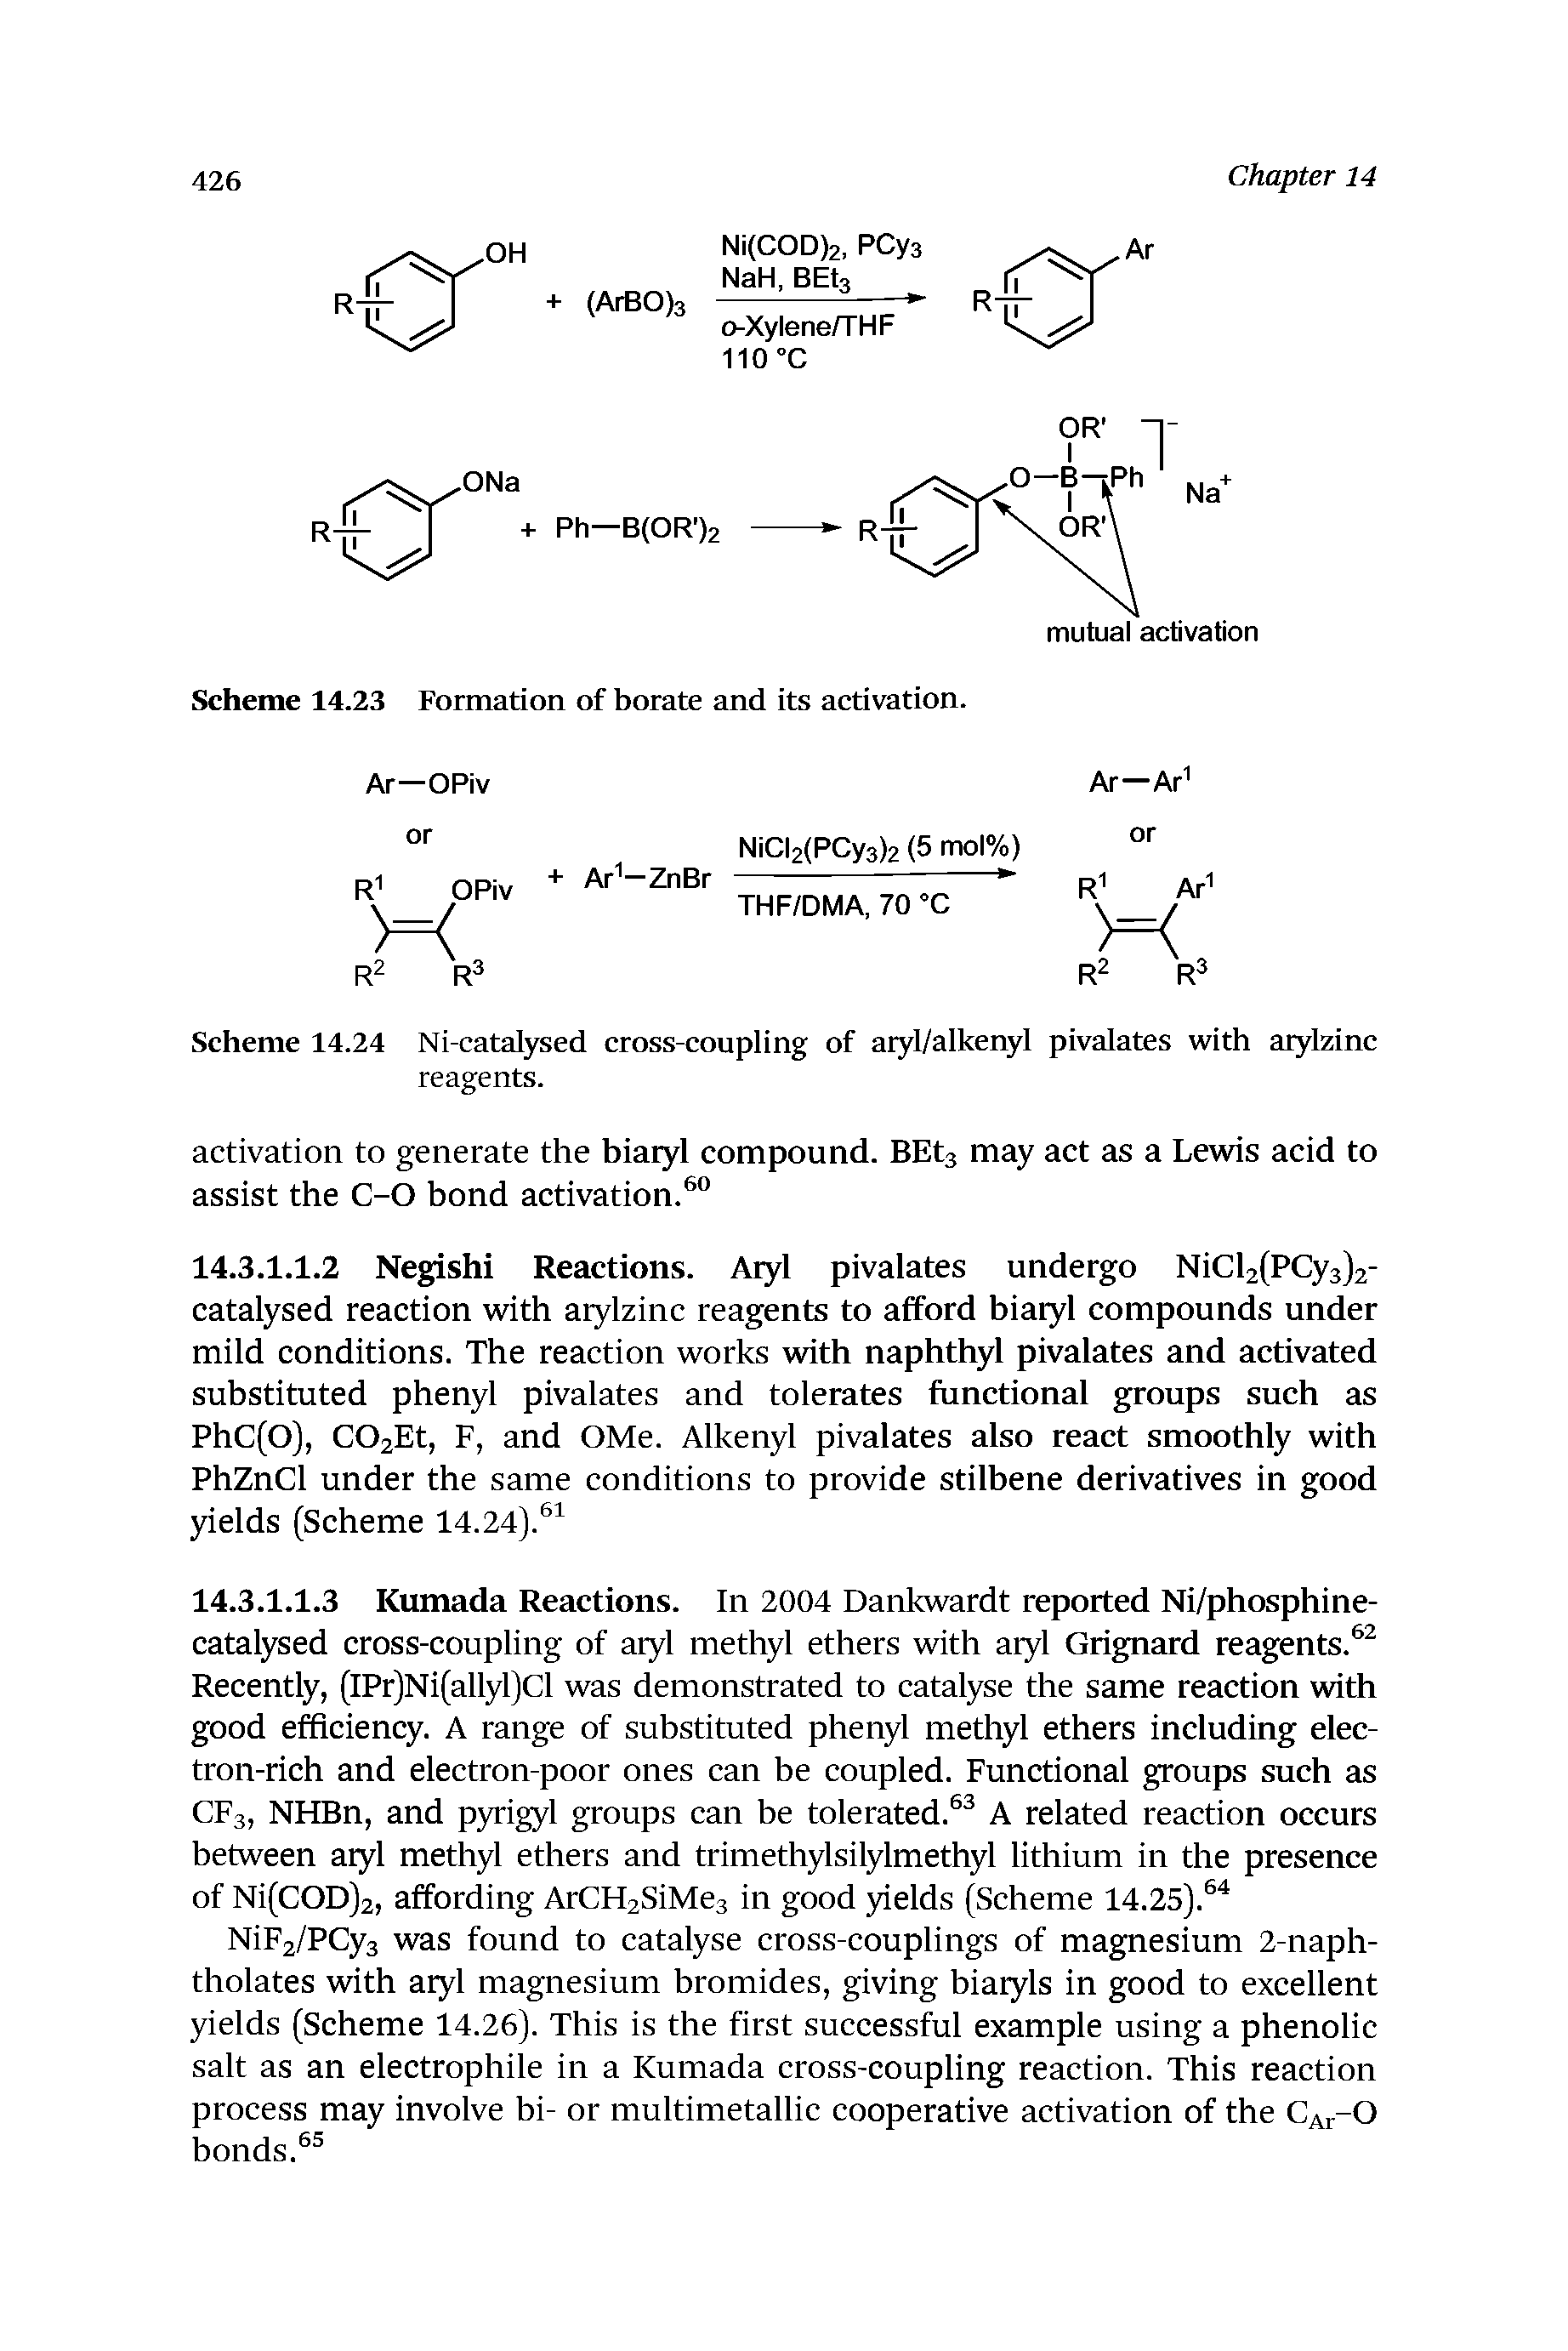 Scheme 14.24 Ni-catalysed cross-coupling of aryl/alkenyl pivalates with arylzinc reagents.